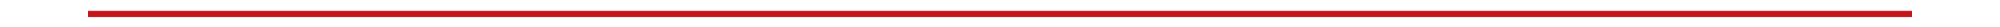 A red line divider